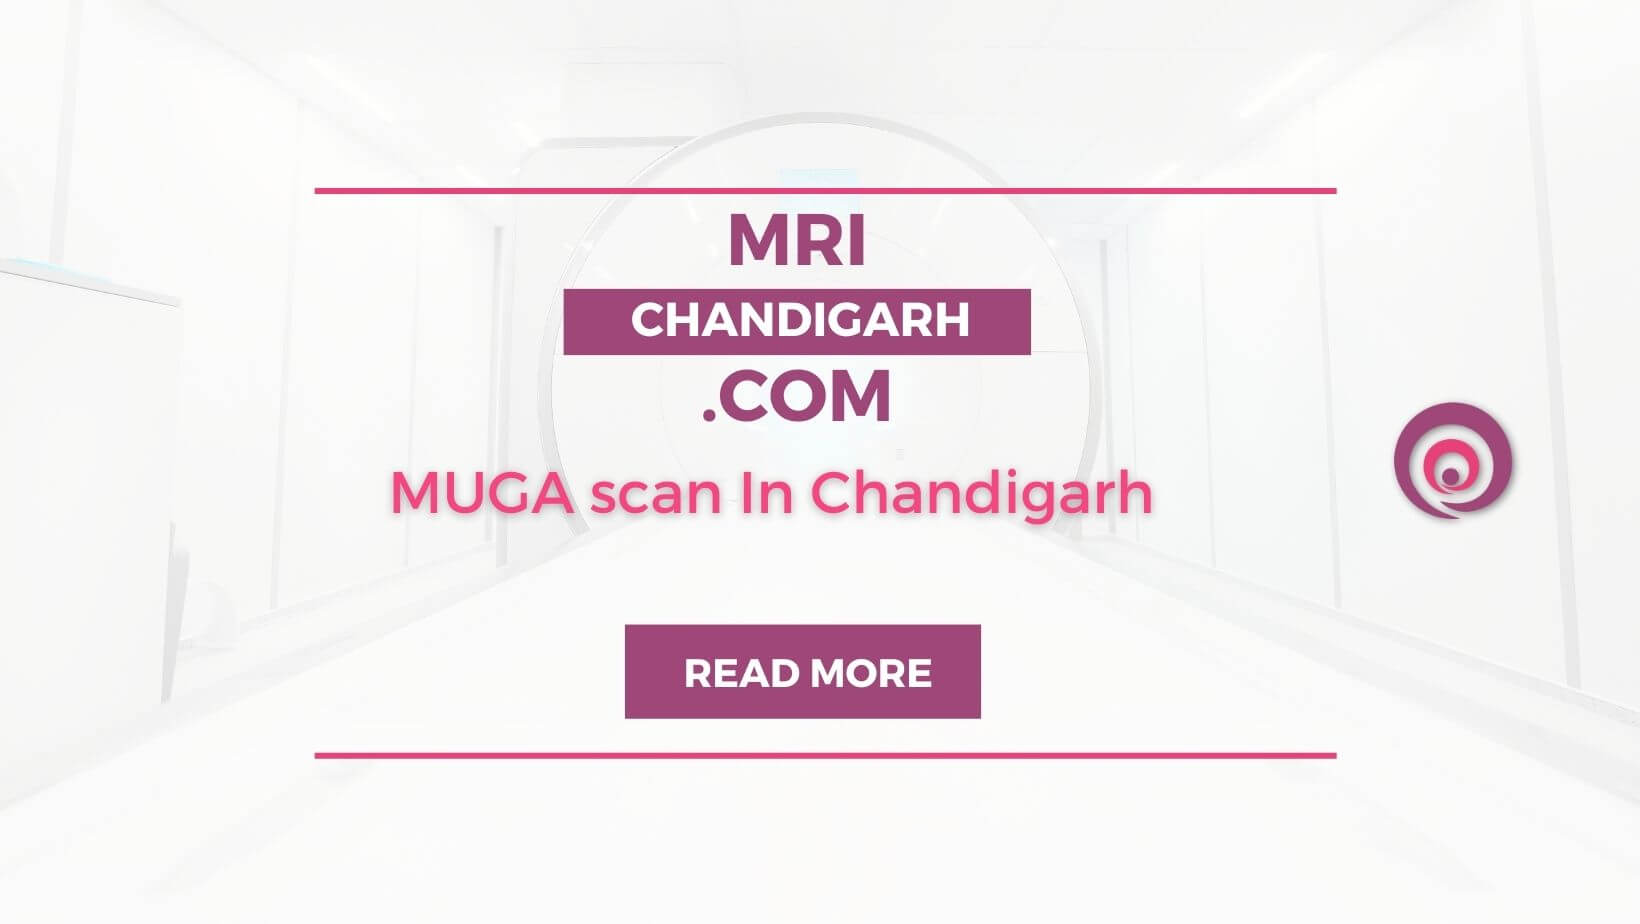 MUGA scan In Chandigarh